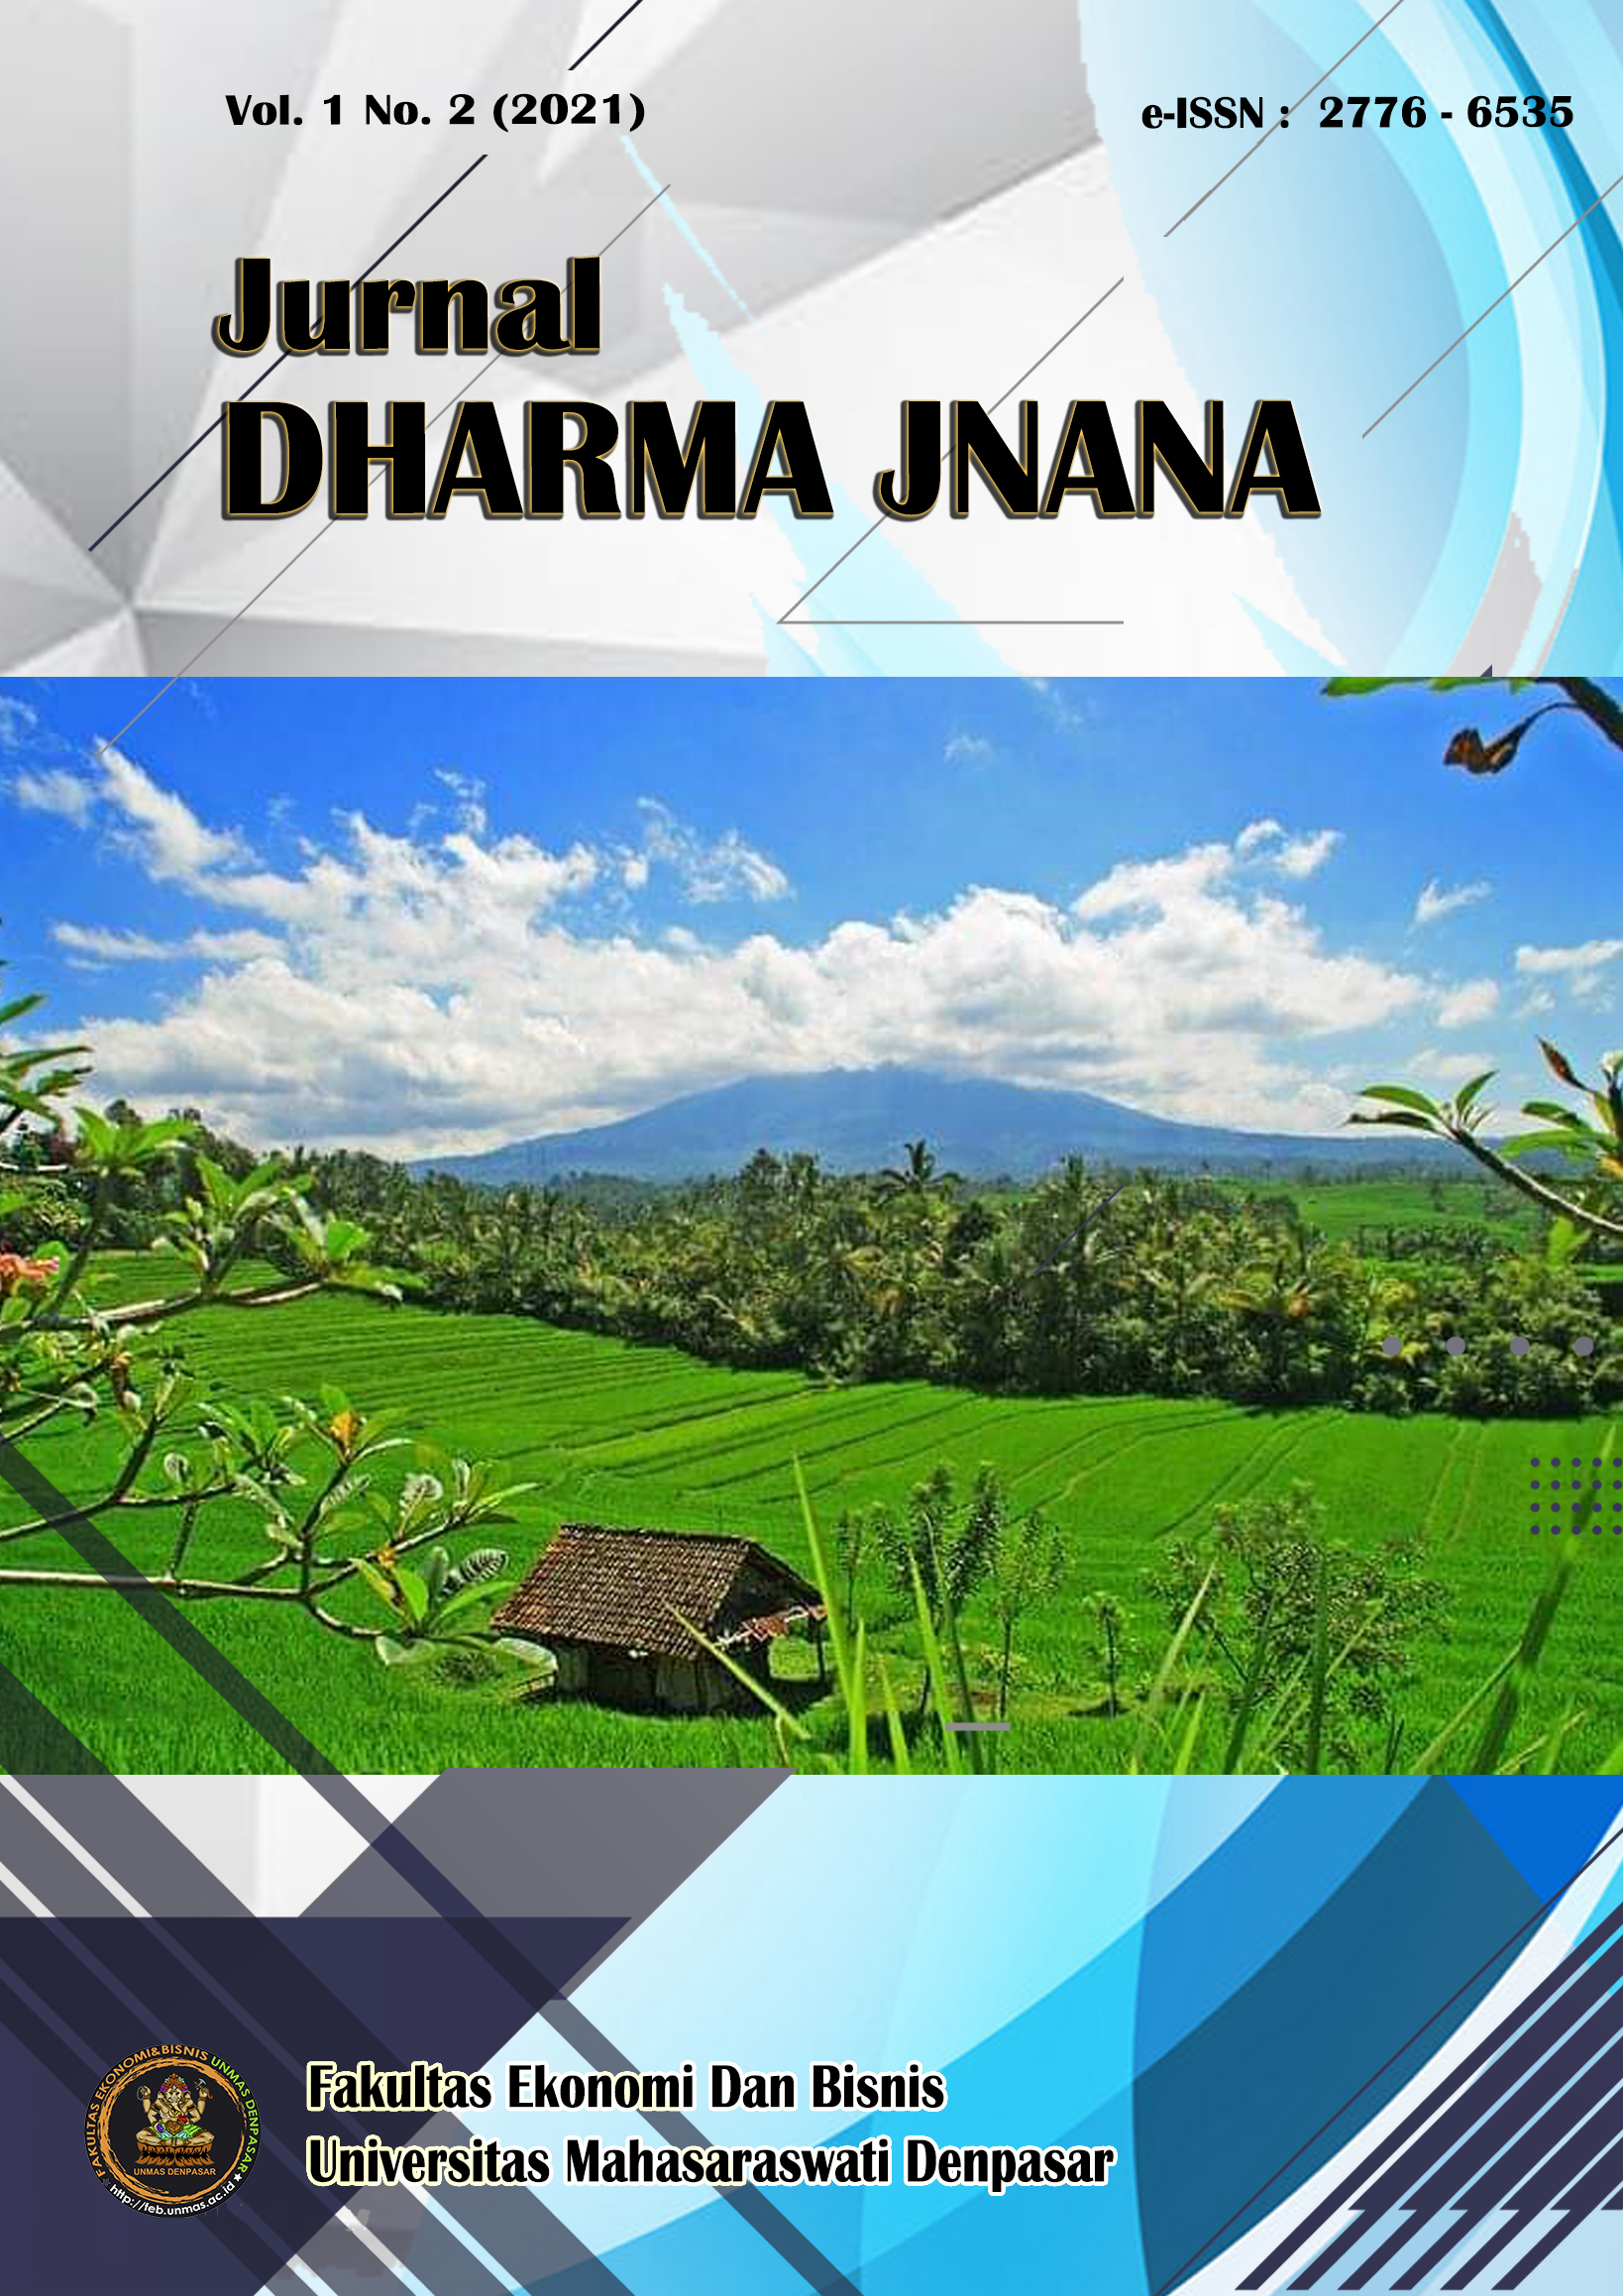 					View Vol. 1 No. 2 (2021): JURNAL DHARMA JNANA
				